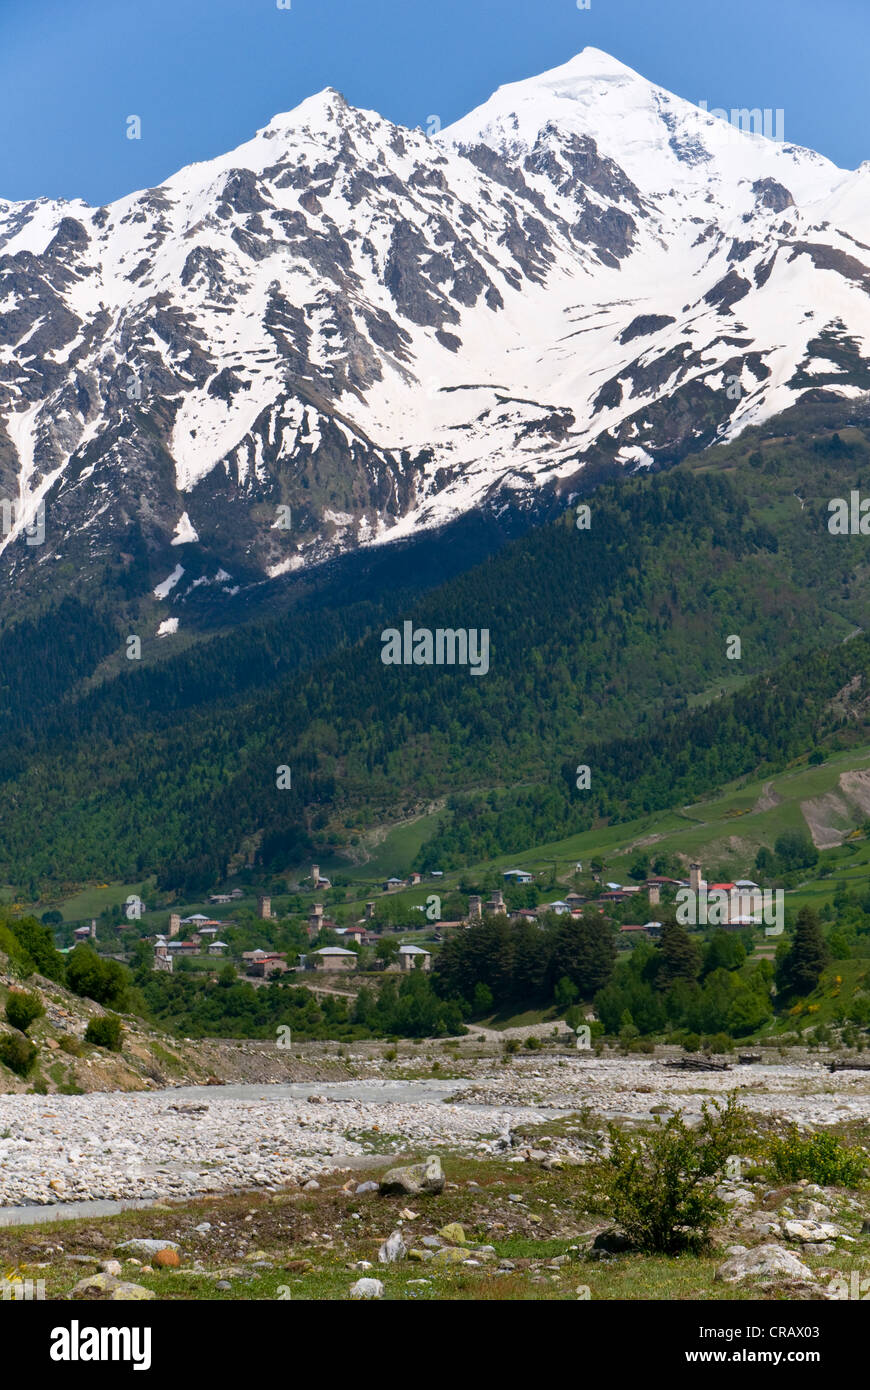 Paisaje alpino con montañas y valles verdes, provincia de Svaneti, Georgia, Oriente Medio Foto de stock